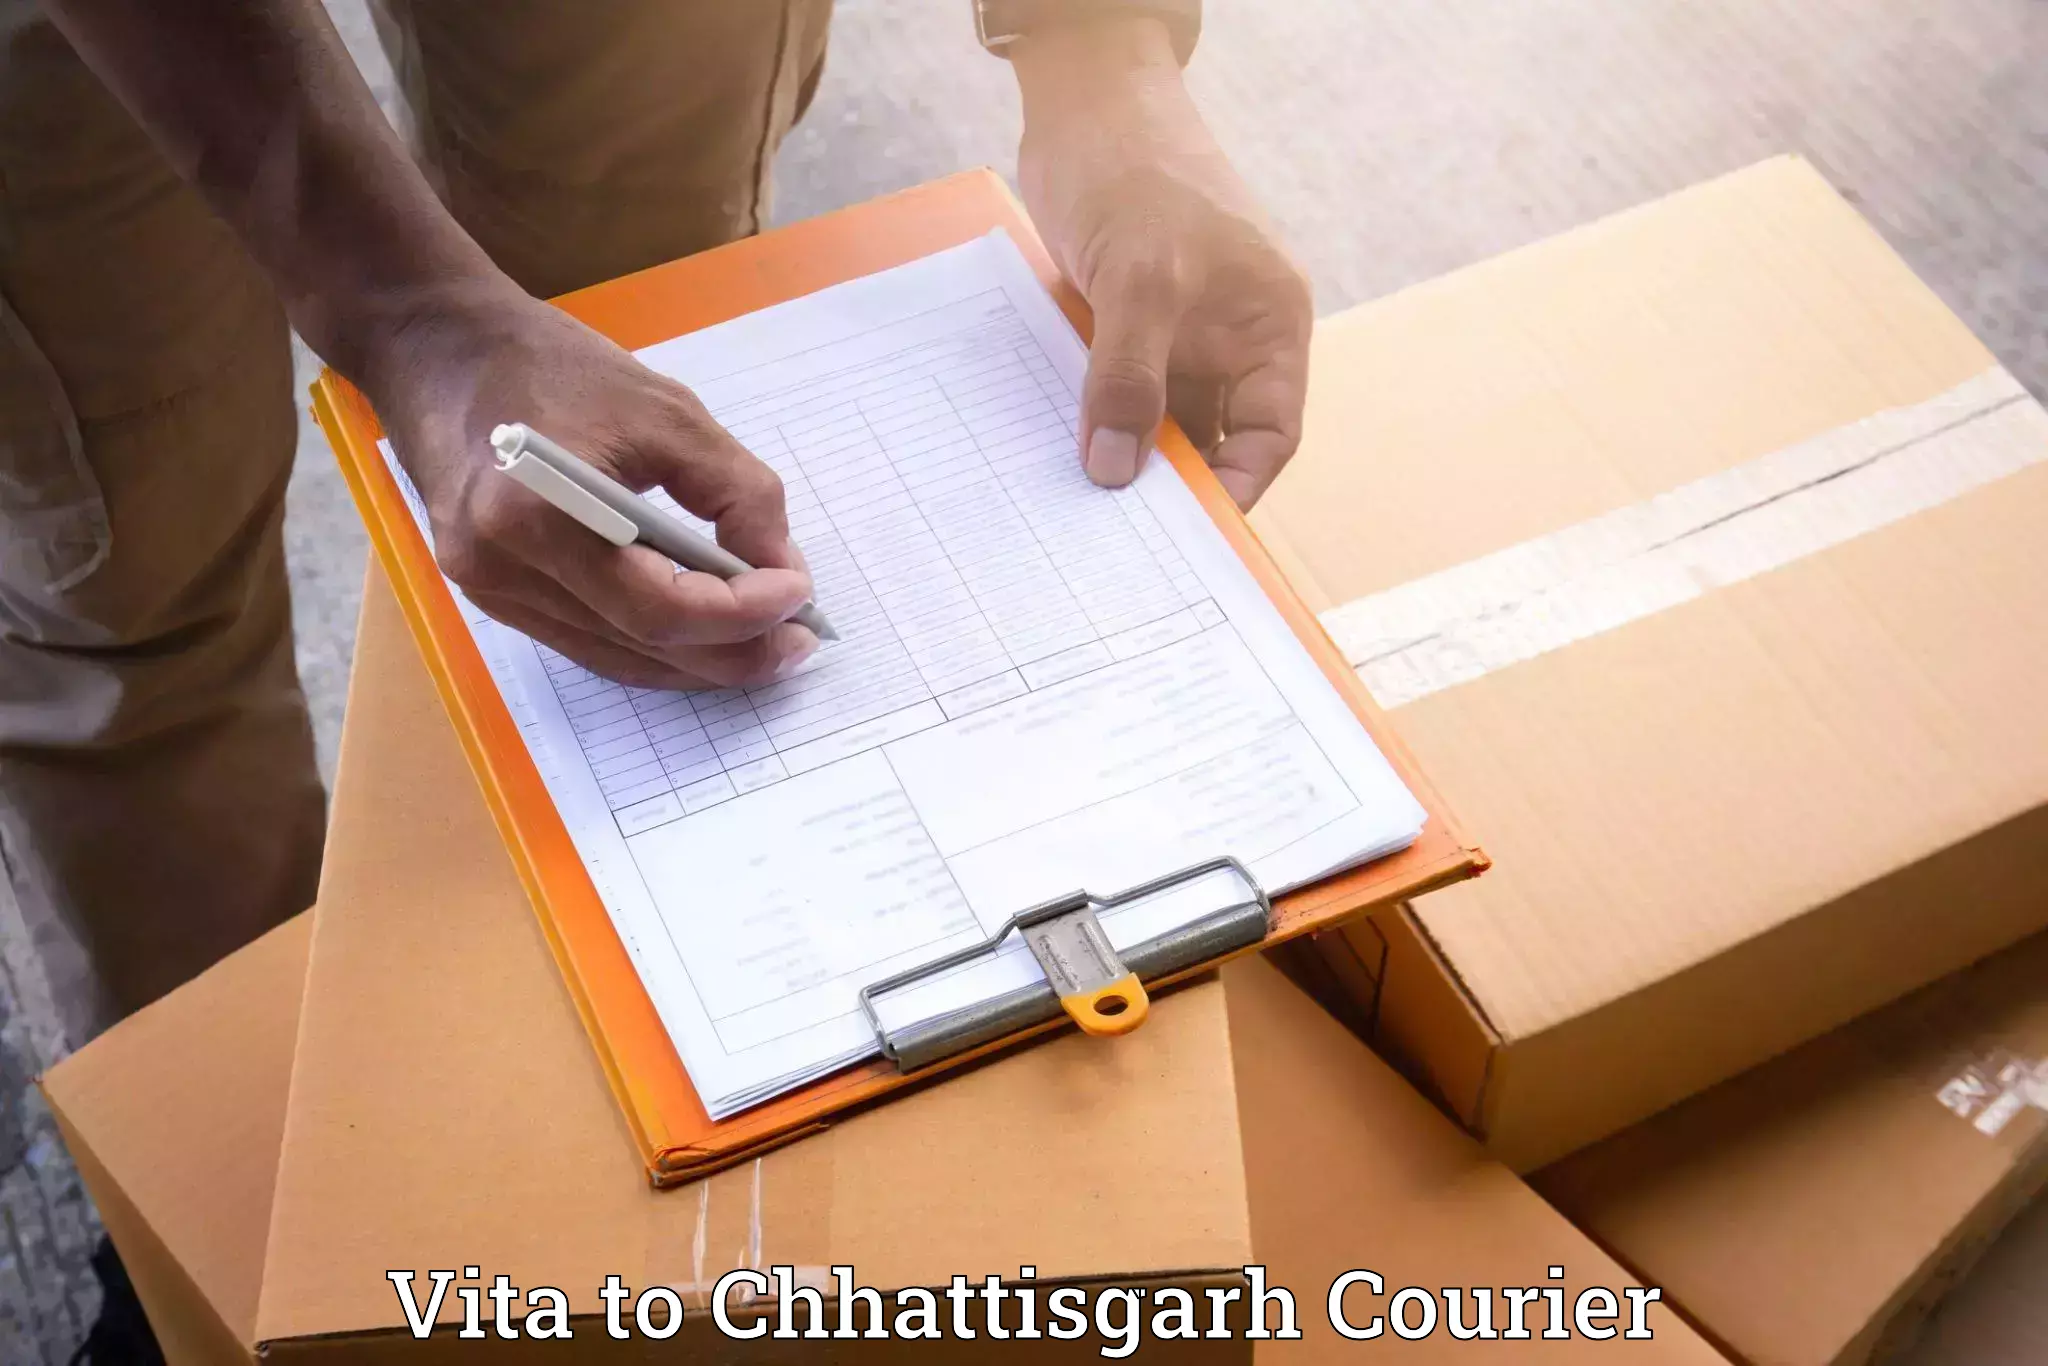 Stress-free moving Vita to Chhattisgarh